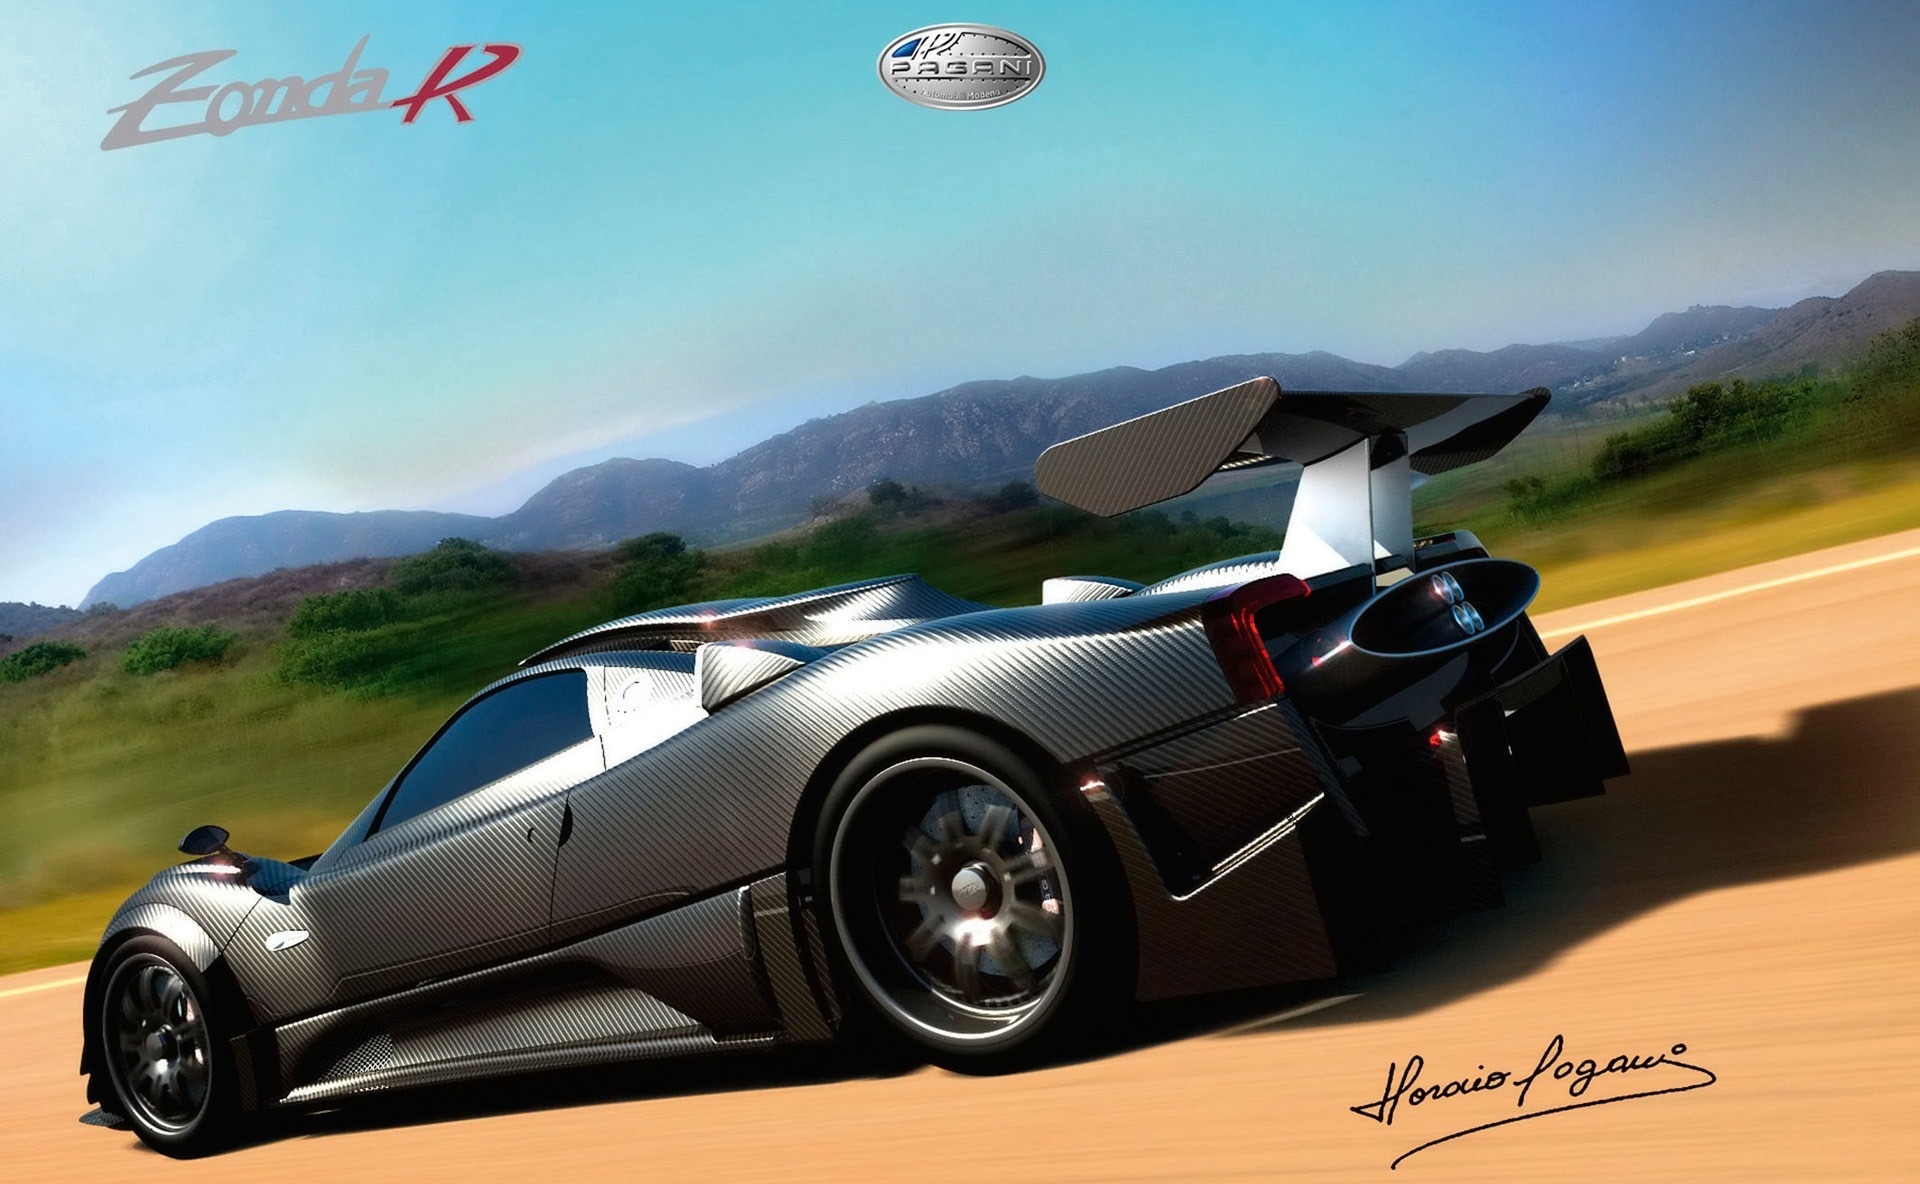 The Pagani Zonda R: A high-definition desktop wallpaper featuring the iconic Zonda R sports car by Horacio Pagani.